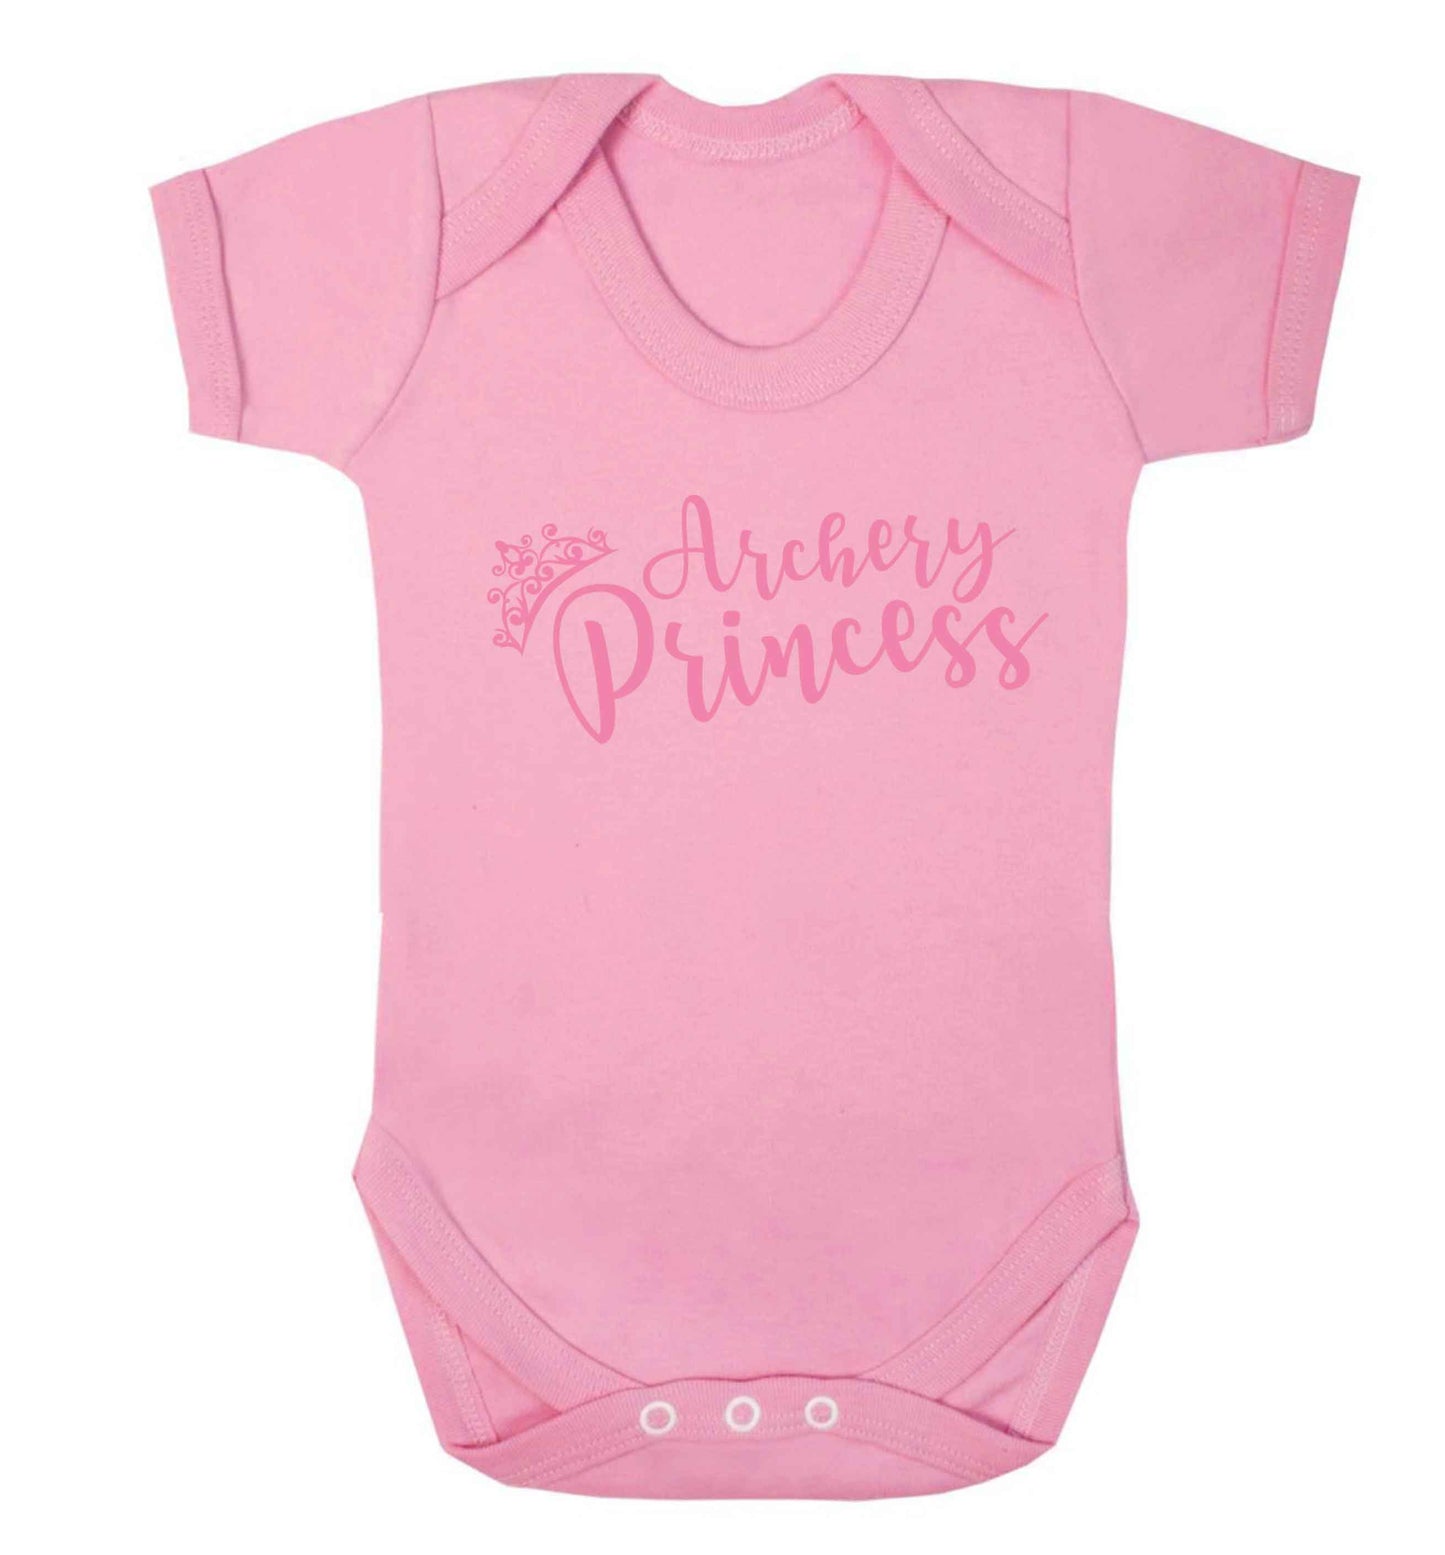 Archery princess Baby Vest pale pink 18-24 months